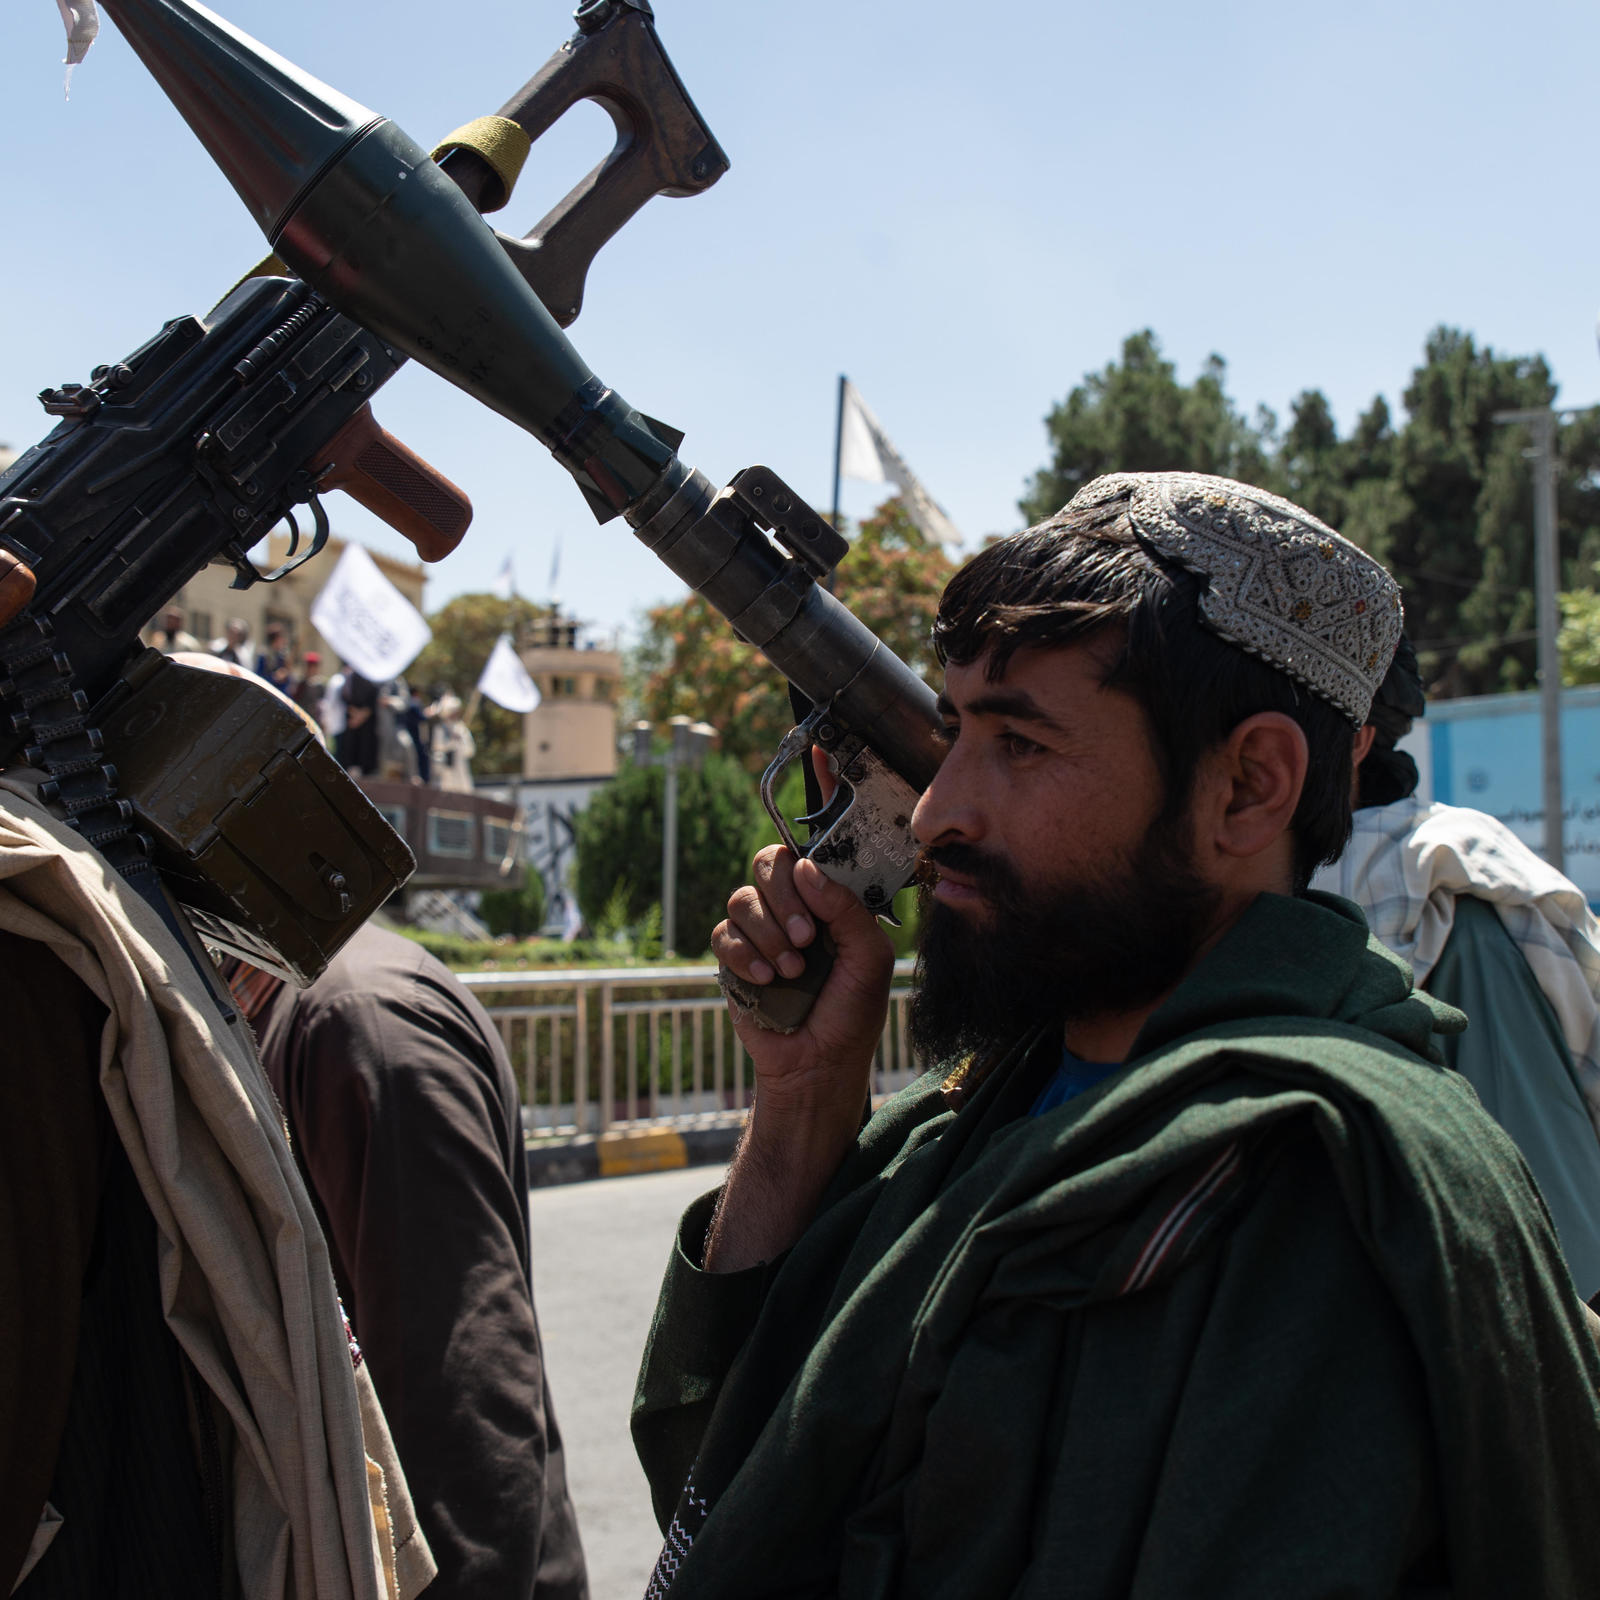 al qaeda setting up new training camps in afghanistan, u.n. report says